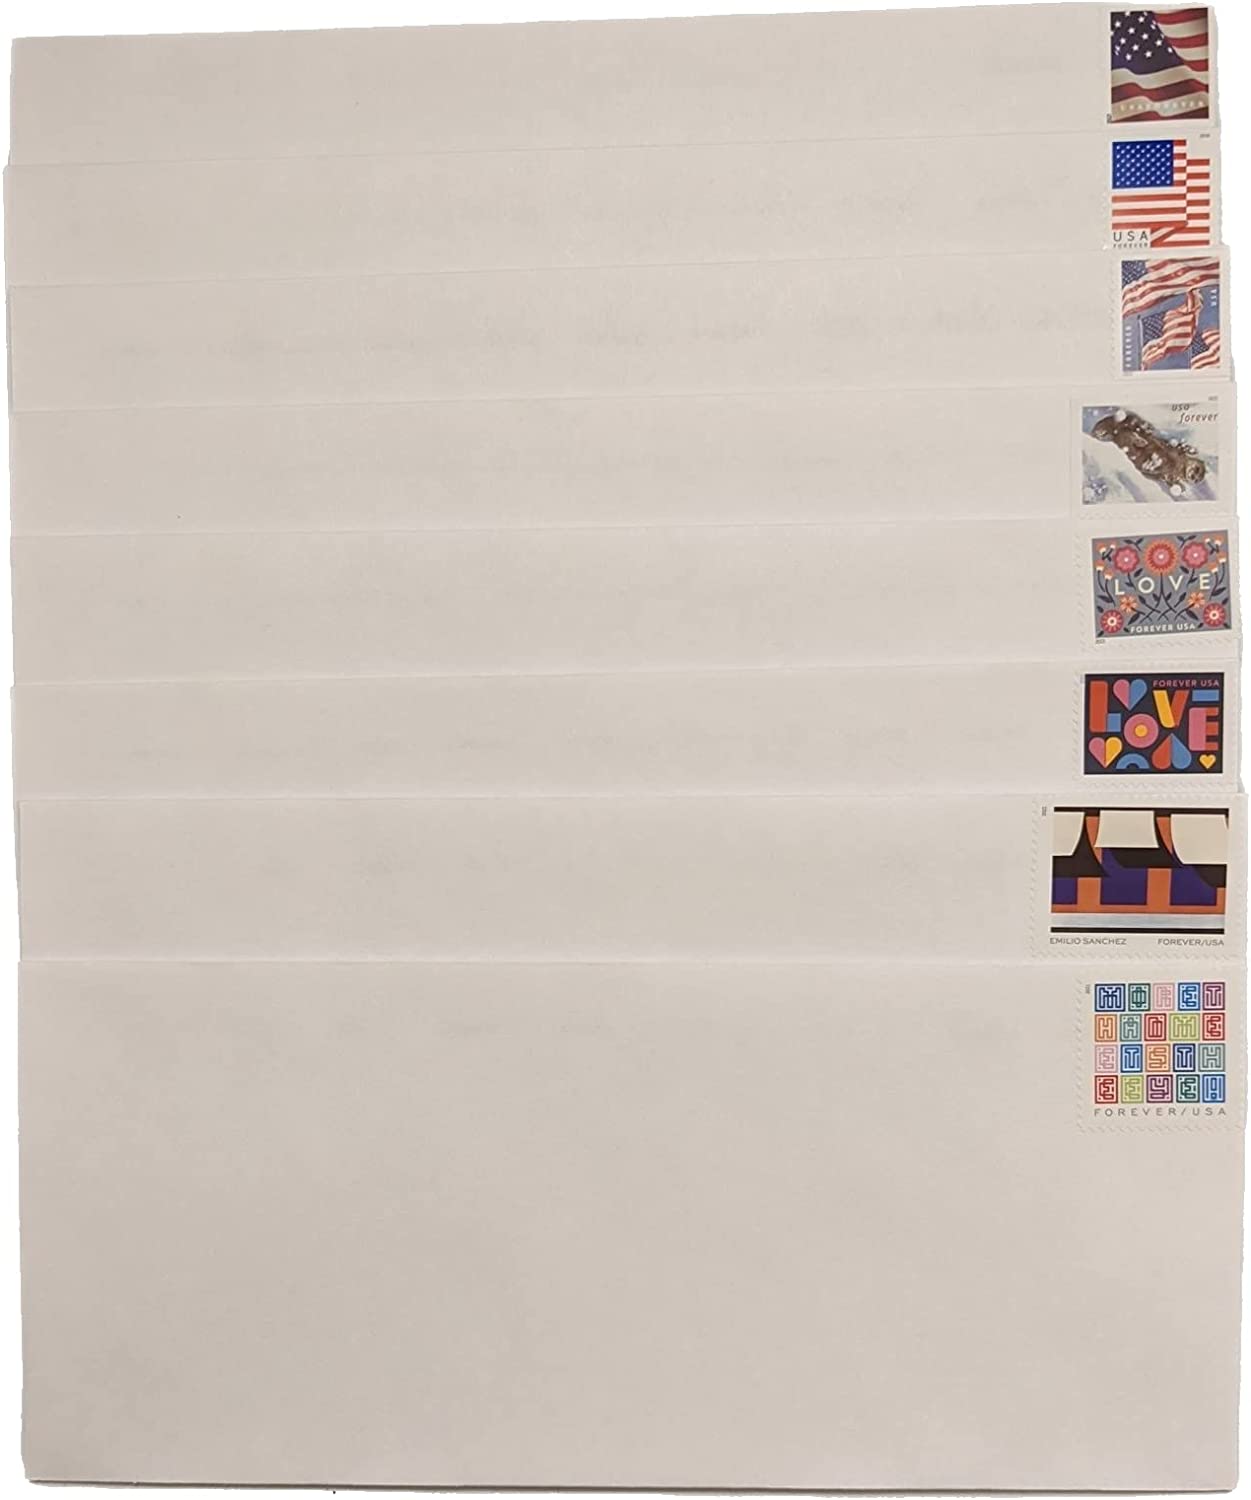 USPS Stamped Envelopes Forever Stamps Postage Attached #10 Self Seal White Security (Stamp Design Varies)